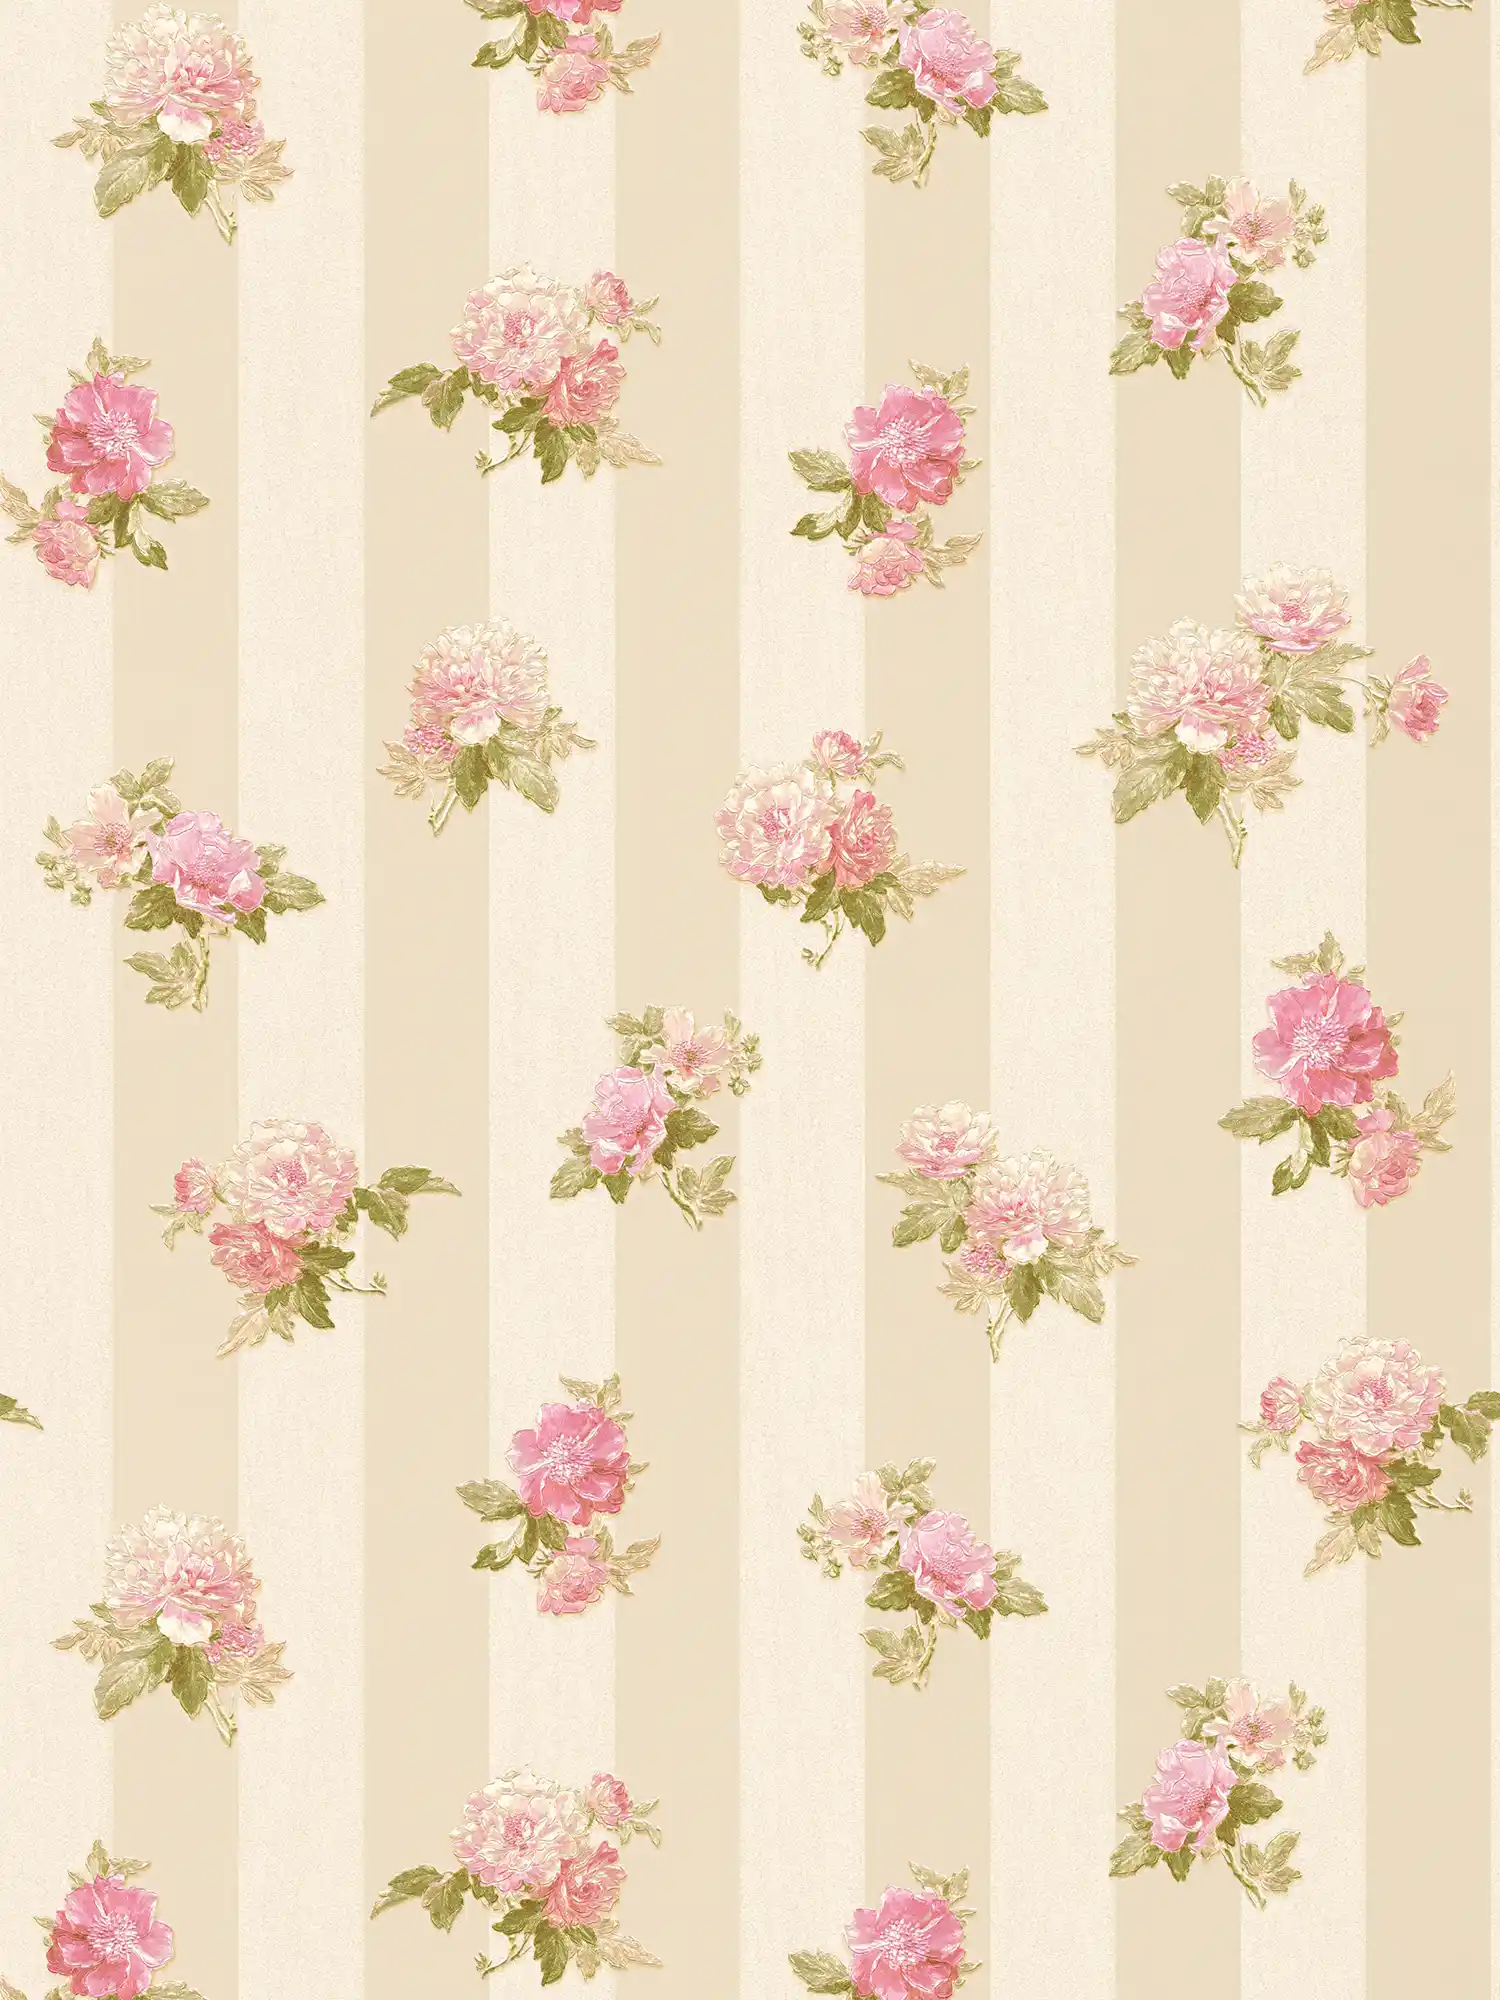 Non-woven wallpaper rose pattern & stripe design - cream, green, pink
